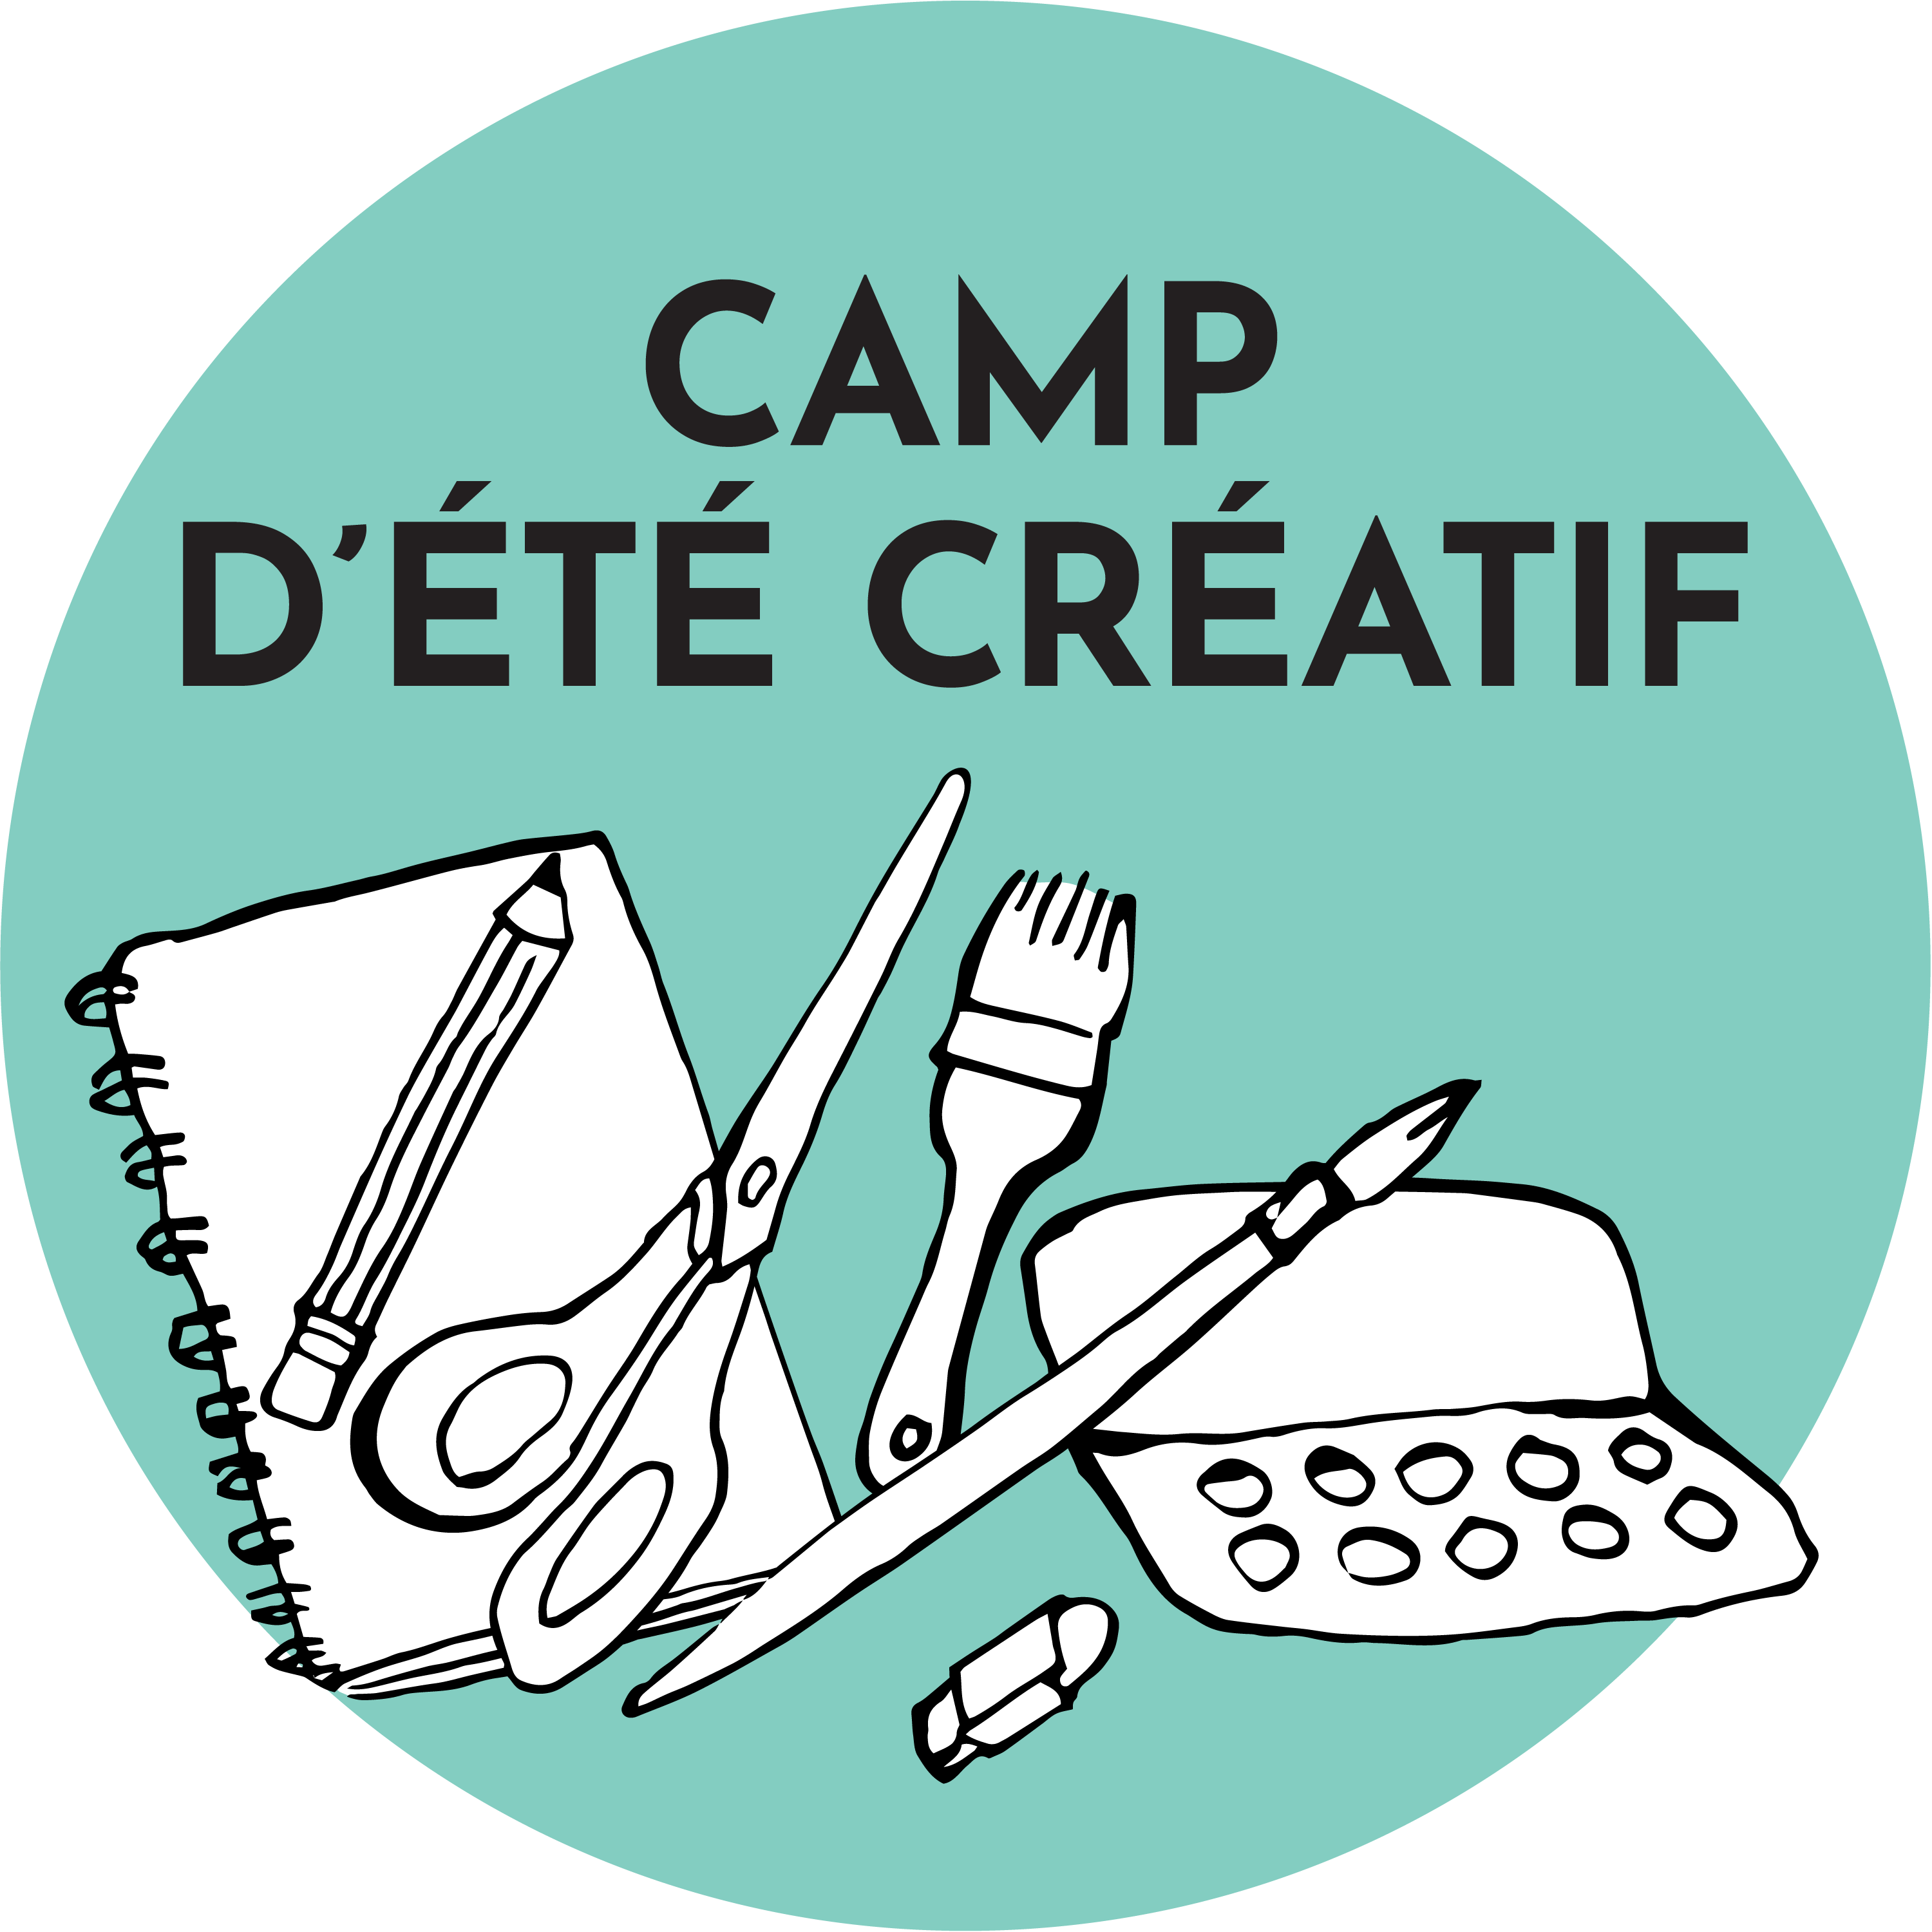 Camp d'été créatif